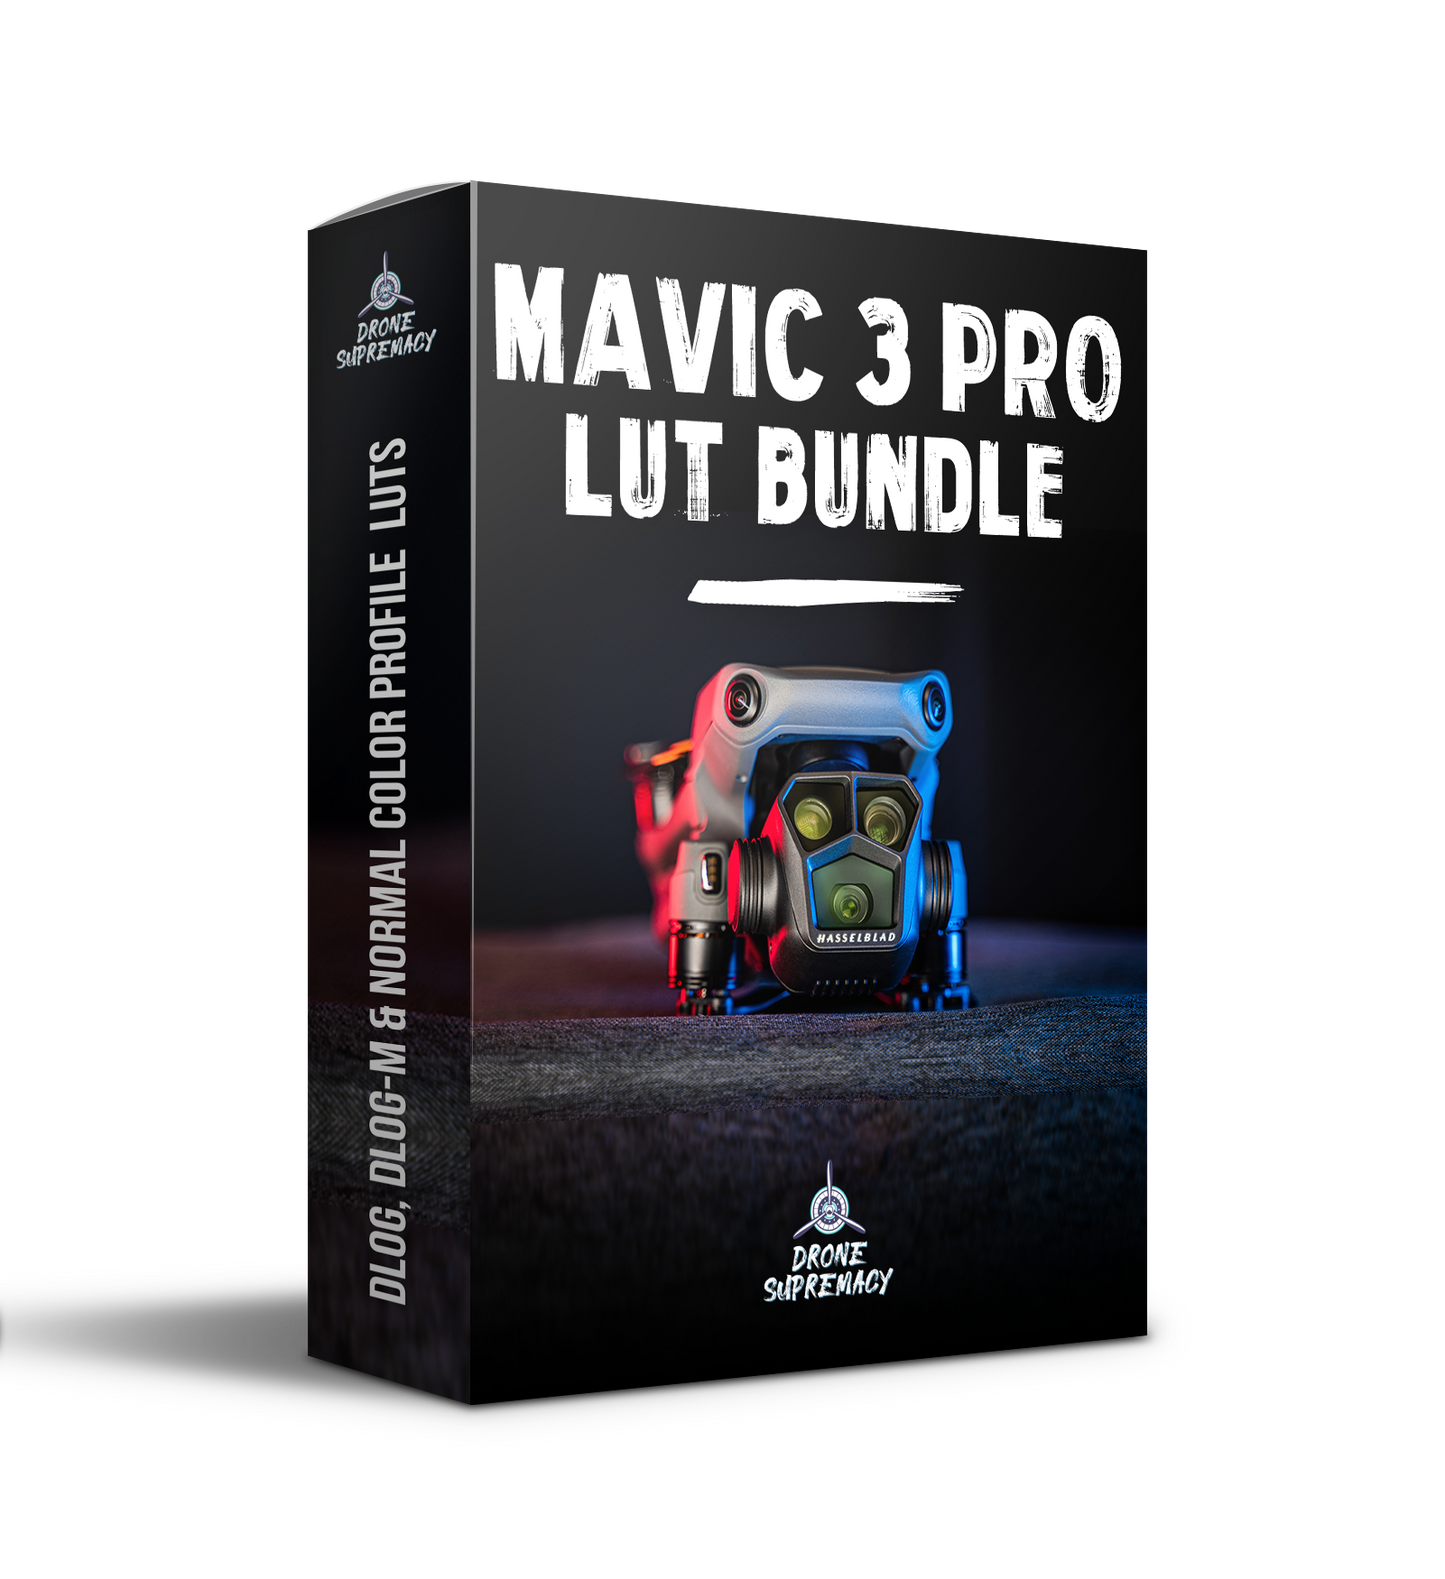 DJI Mavic 3 Pro LUT Bundle (Pack of 3)